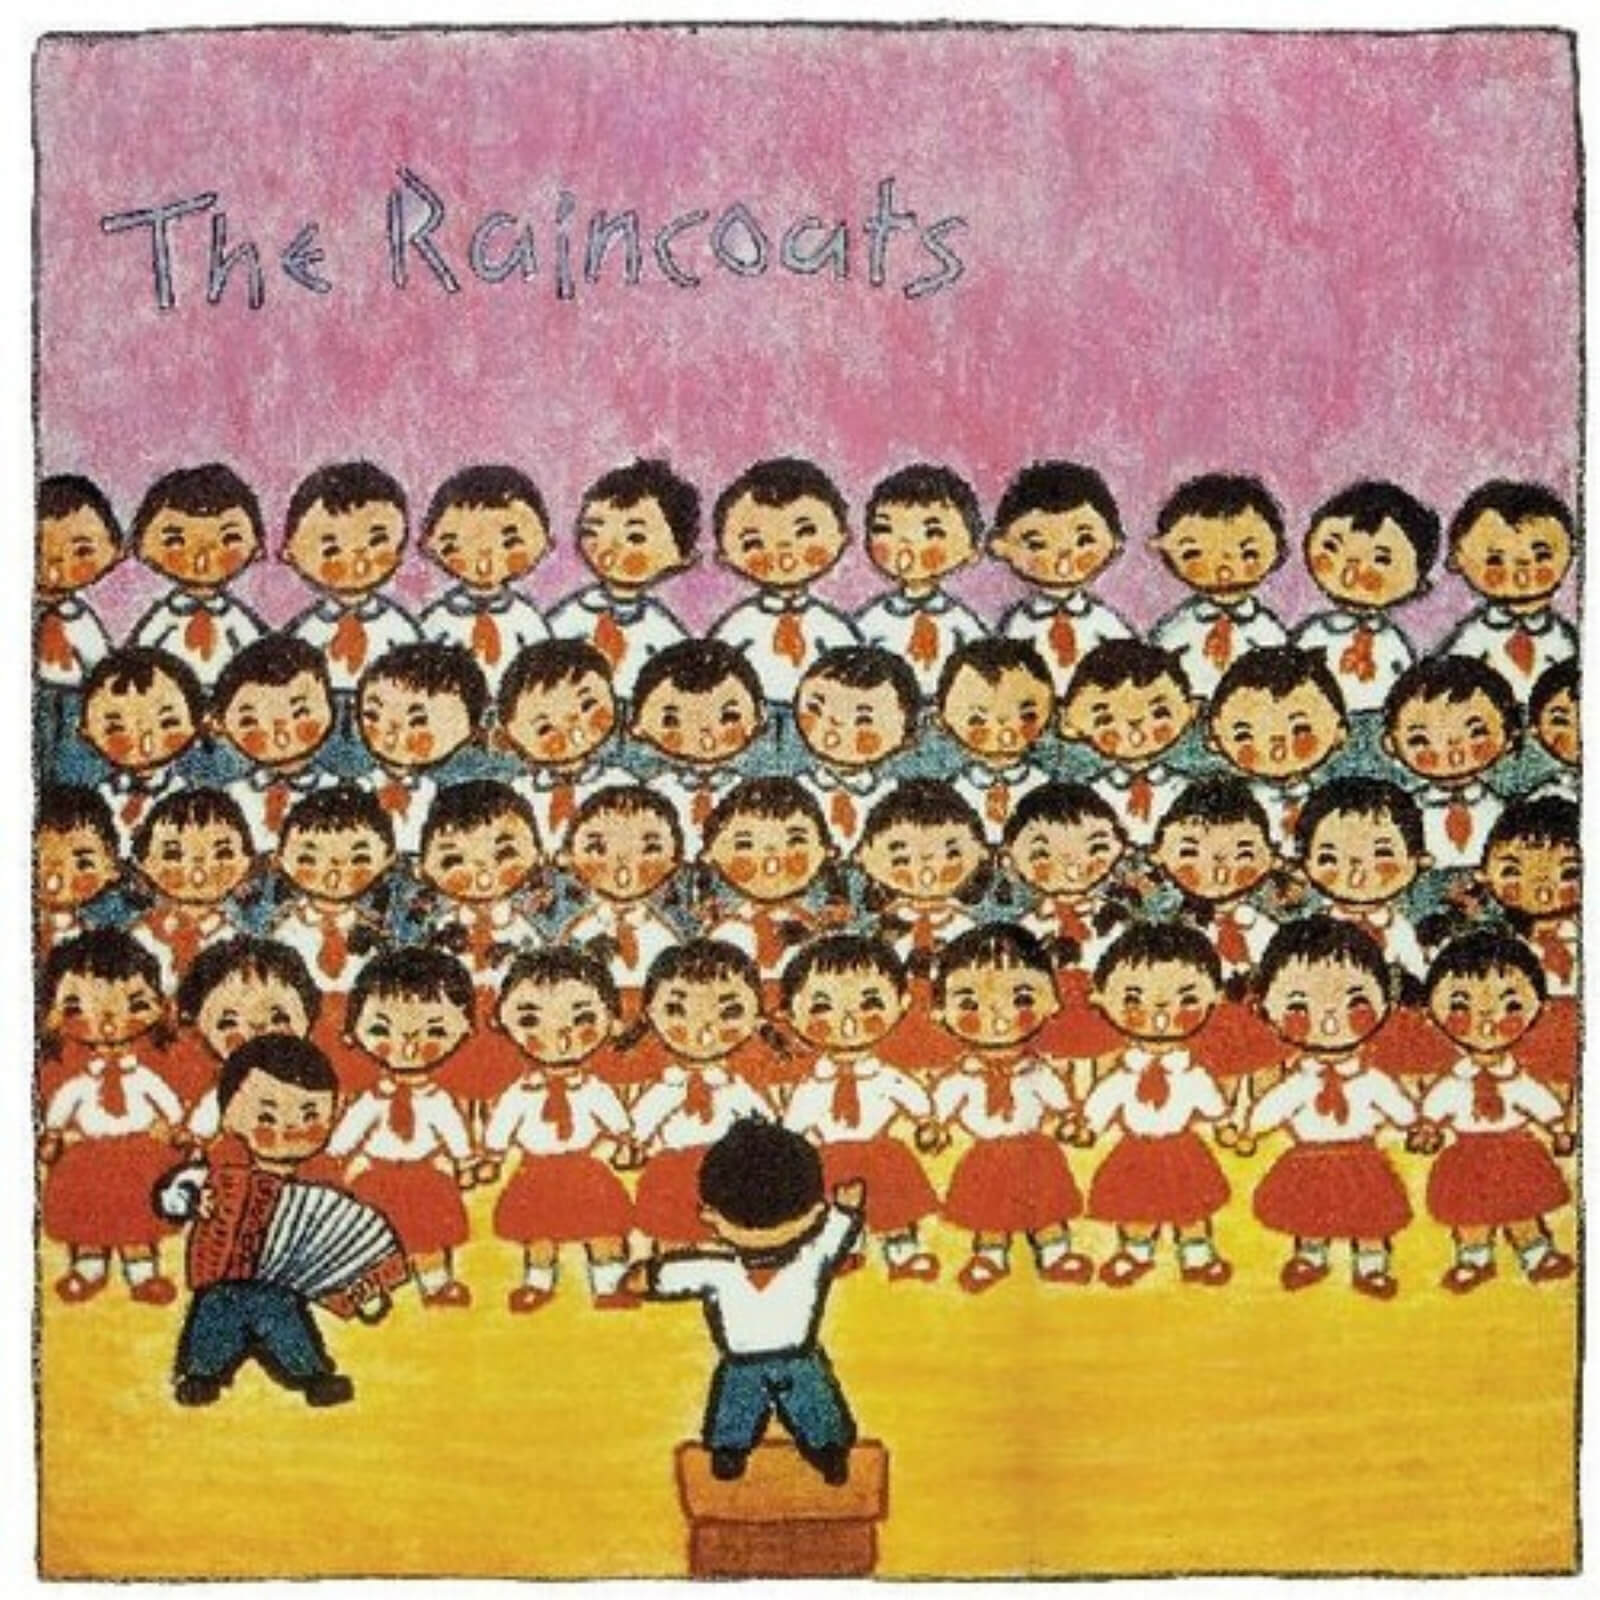 The Raincoats - The Raincoats (Anniversary Edition) LP